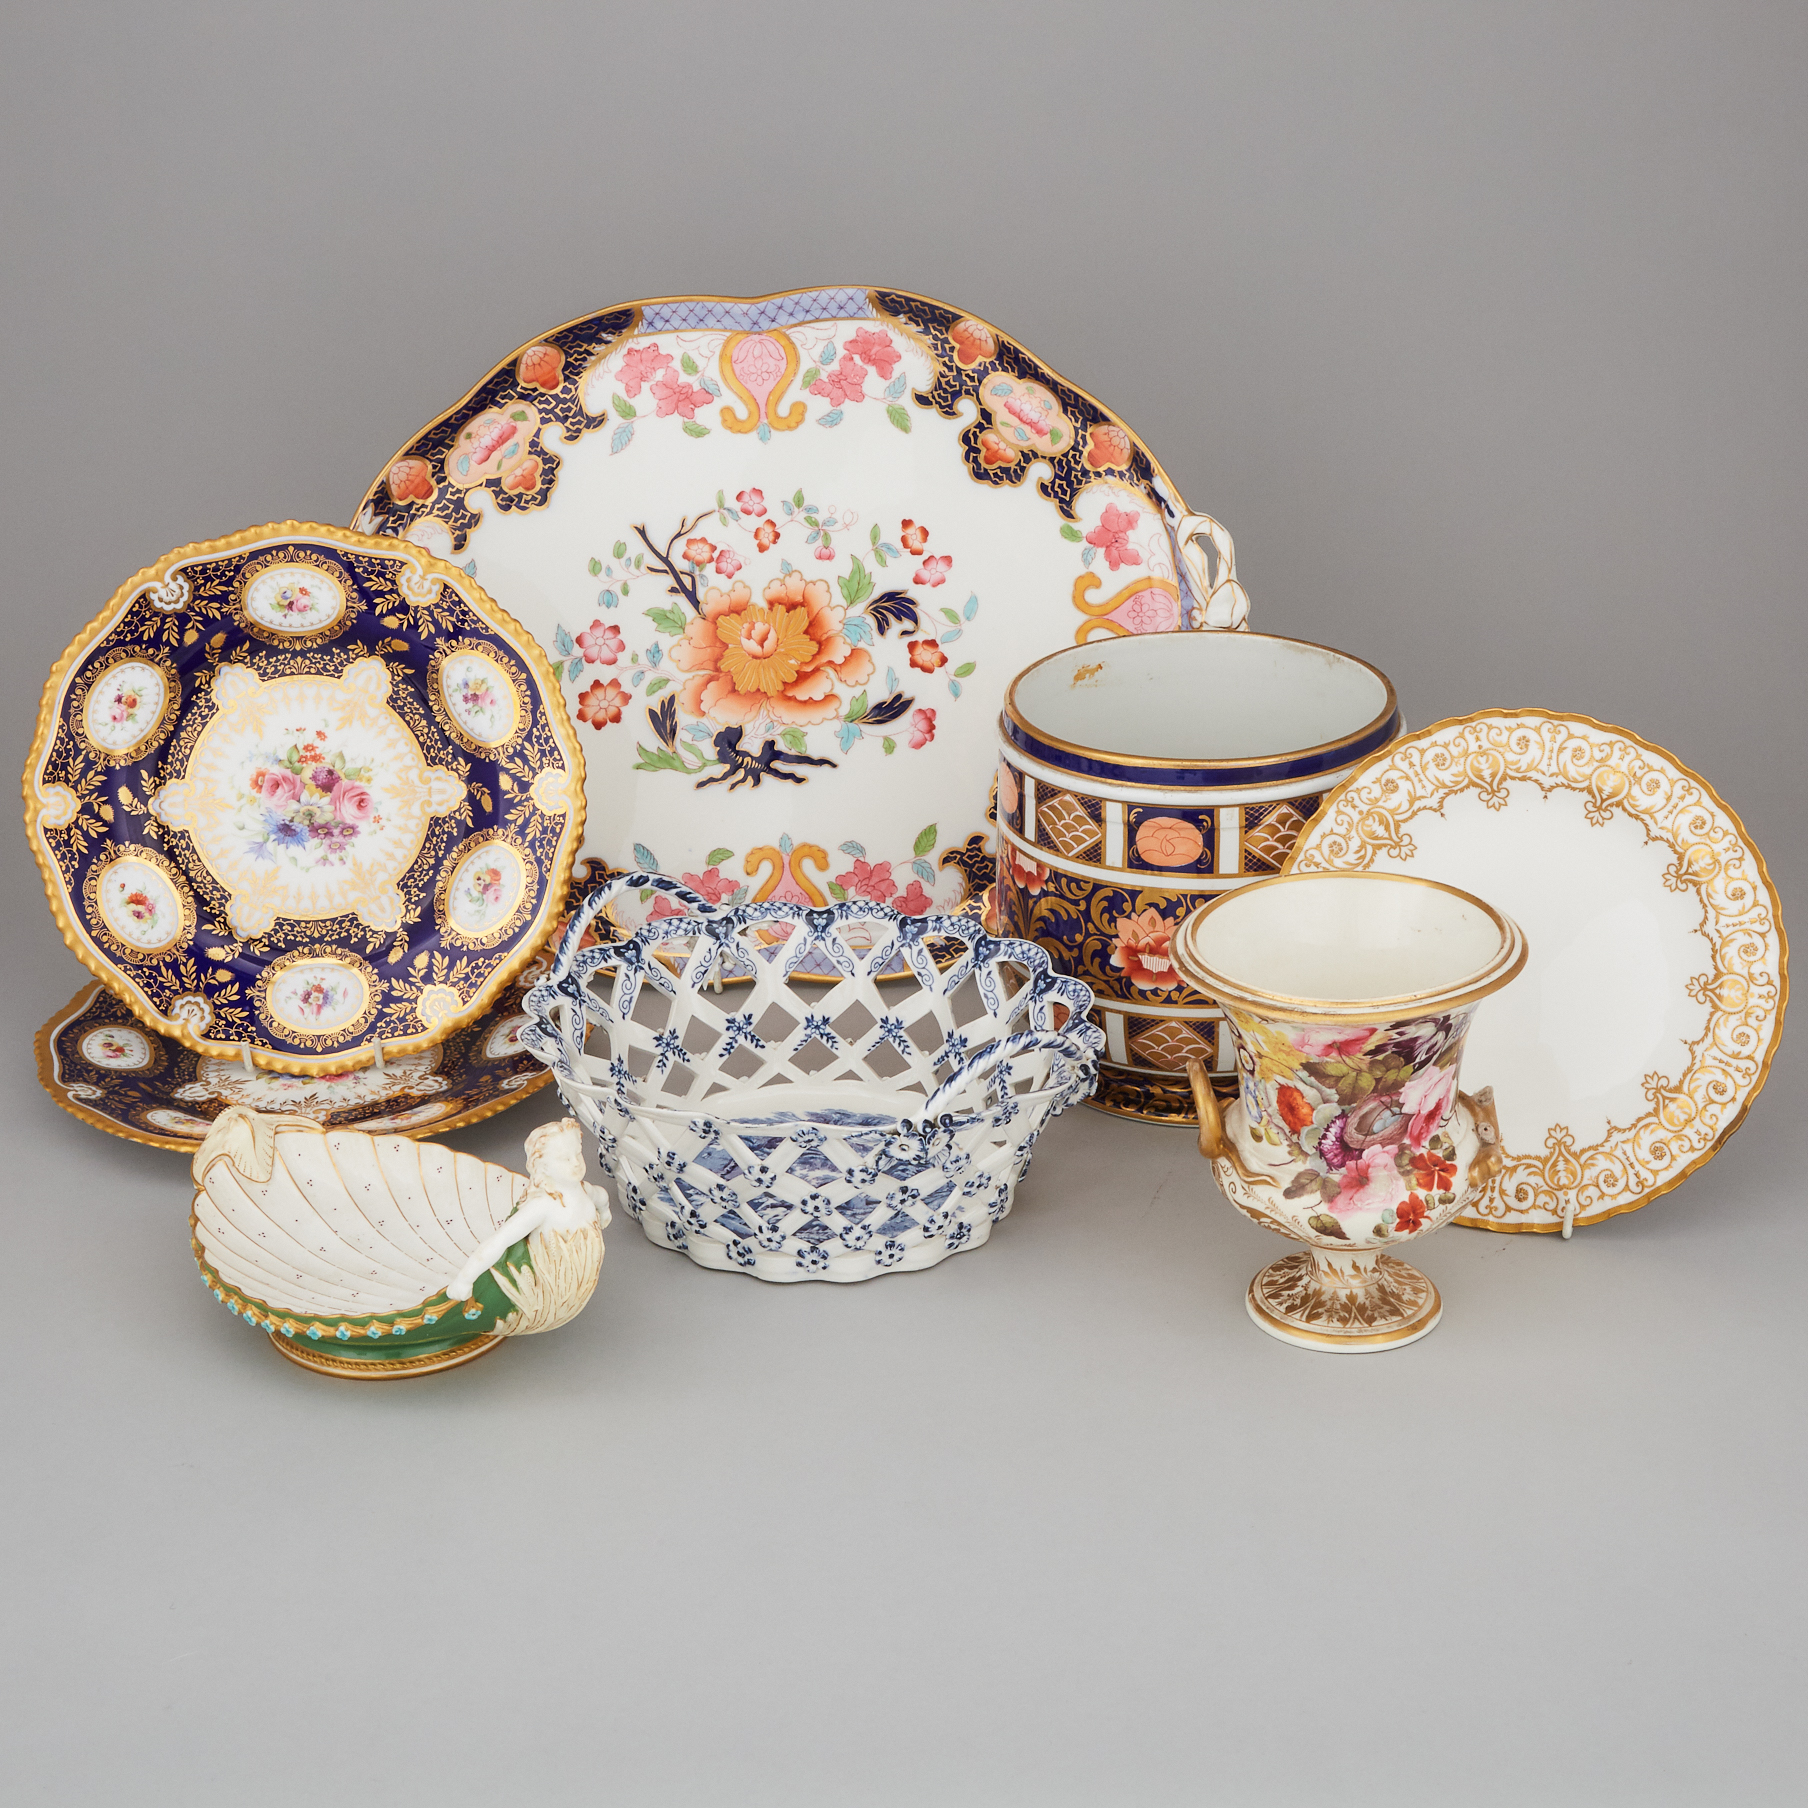 Group of English Ceramics, 19th/20th century